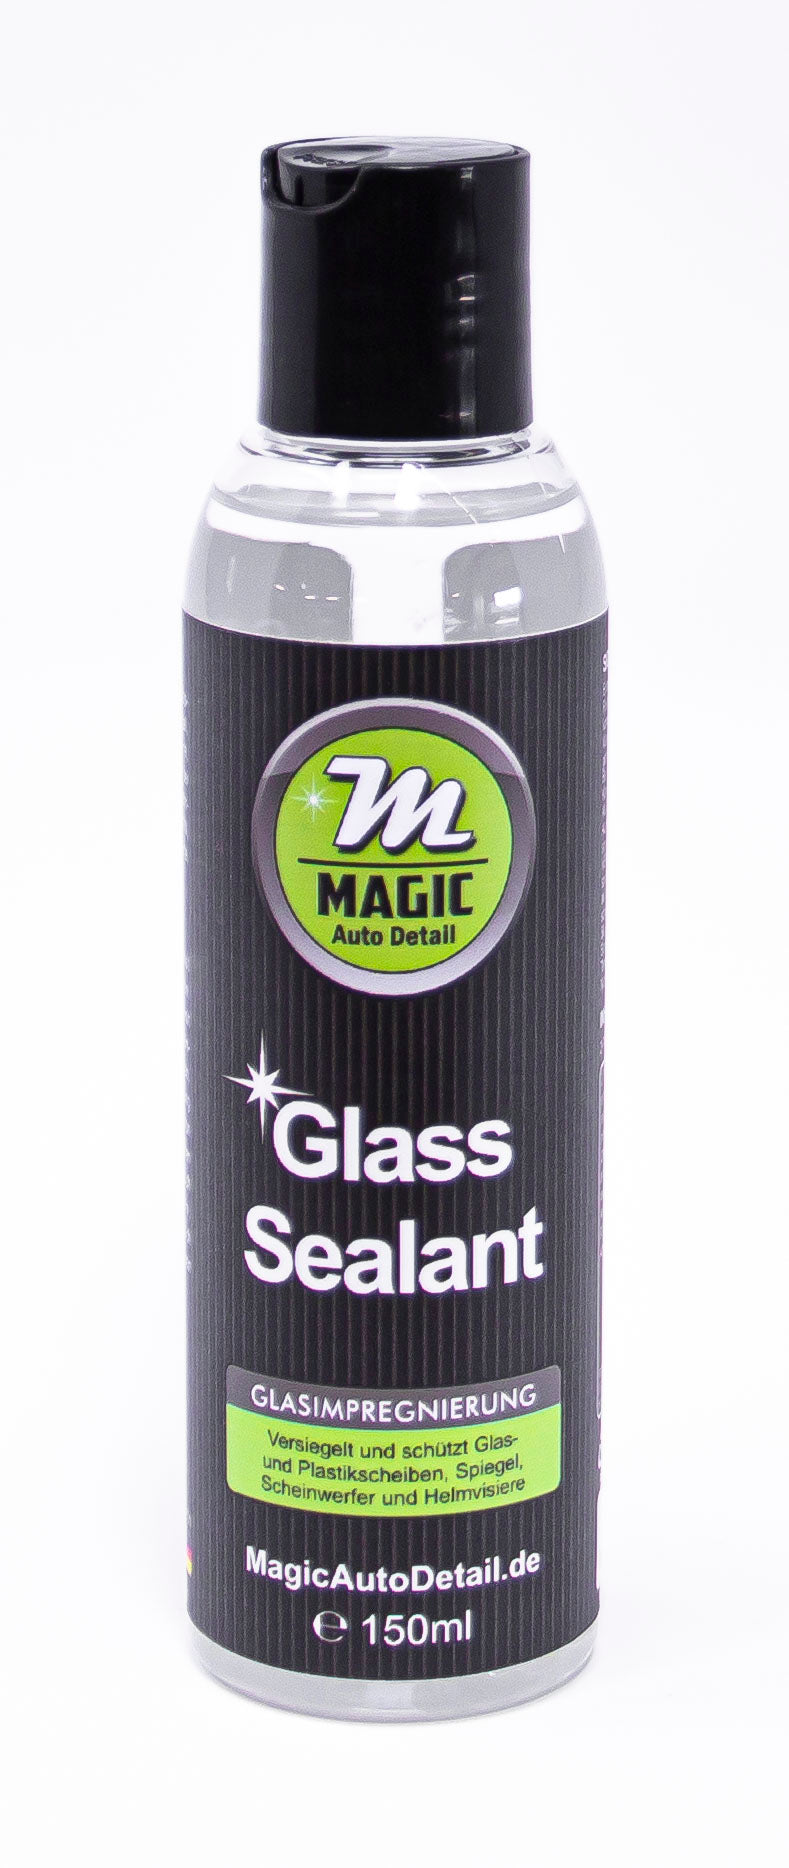 GLASS SEALANT Spezial-Glasversiegelung